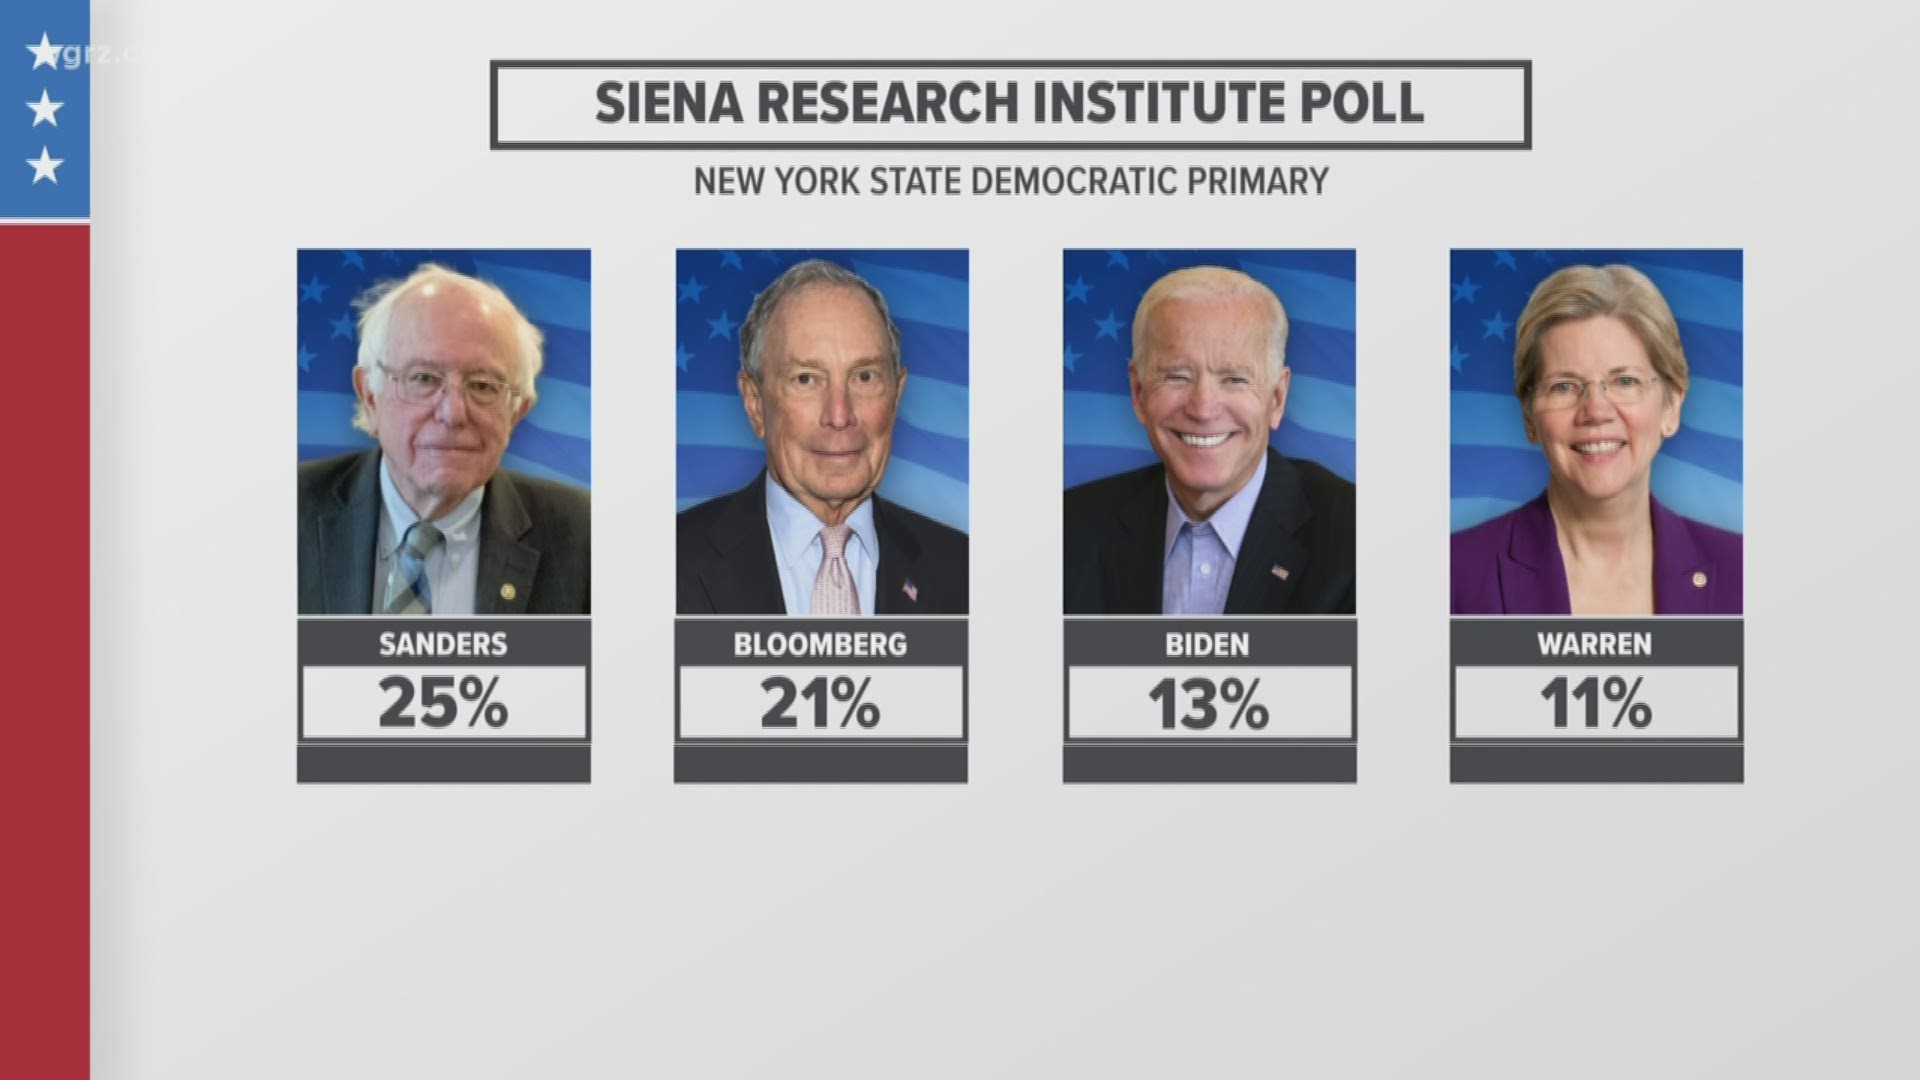 Senator Sanders leads in New York Poll